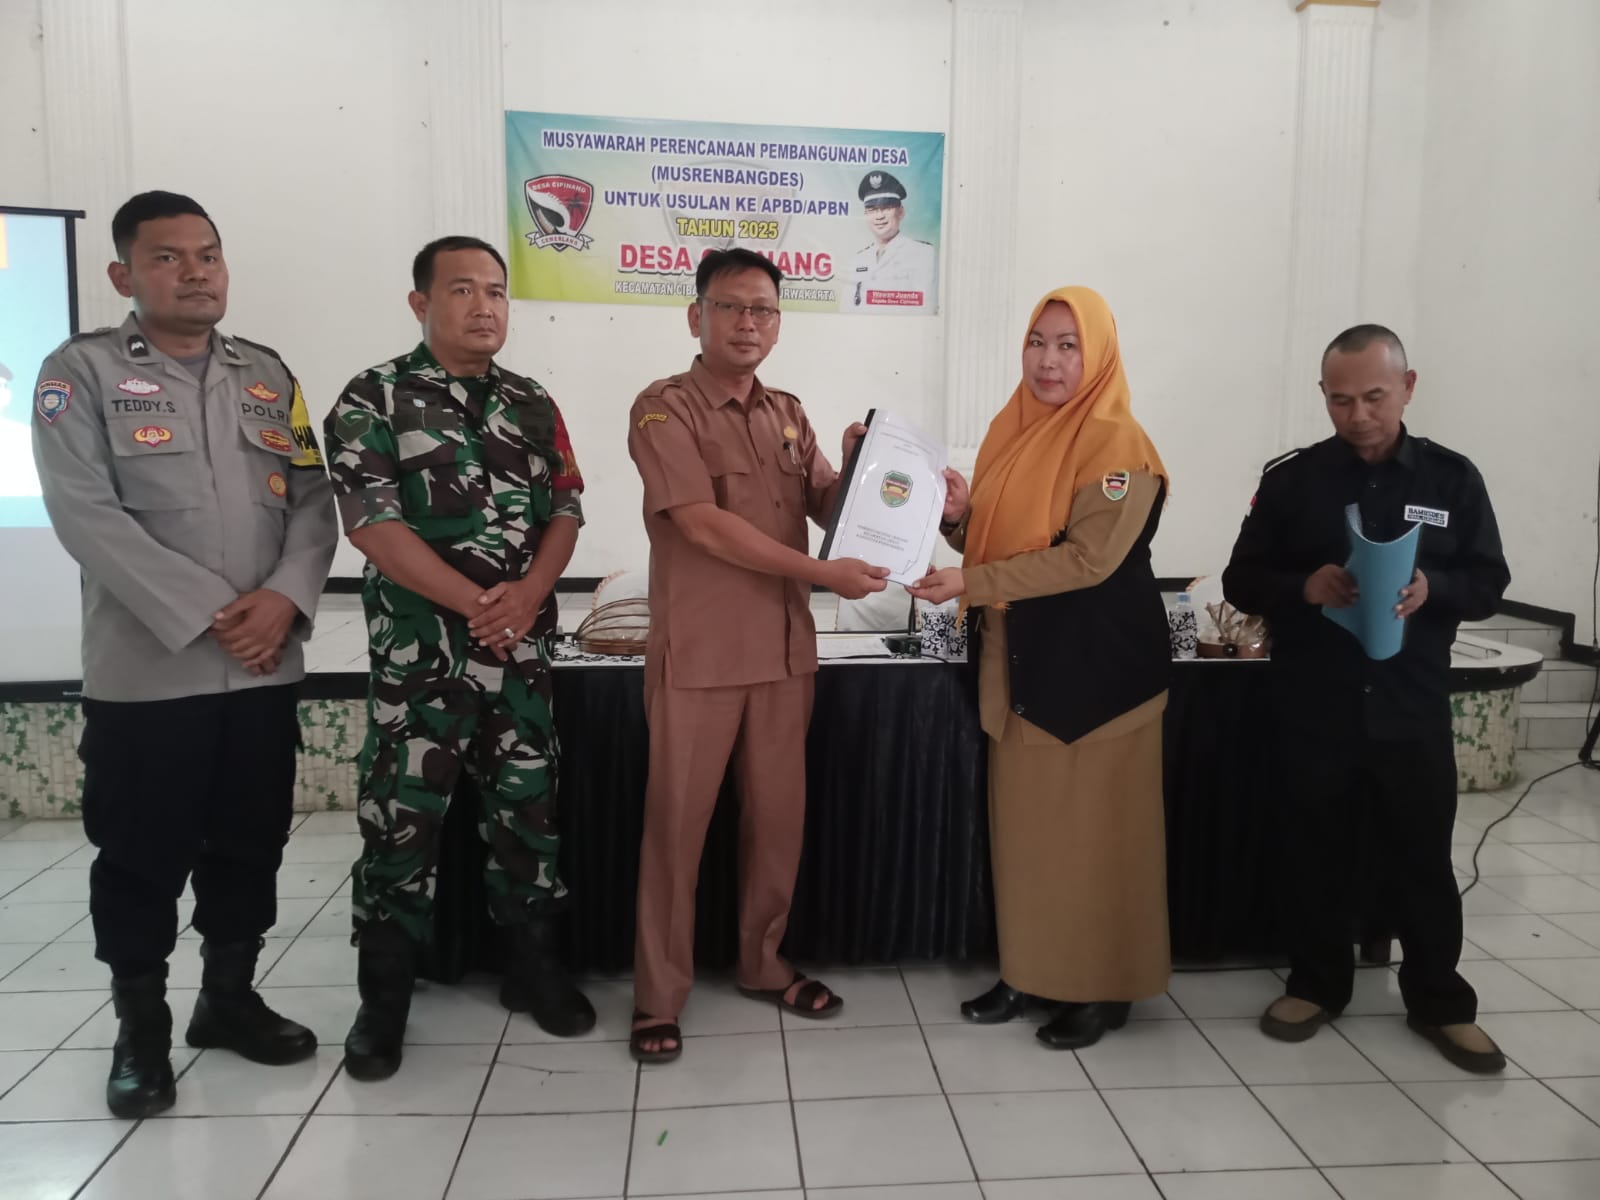 Pemerintah Desa Cipinang bersama BPD melaksanakan Musrenbang untuk Tahiun 2025